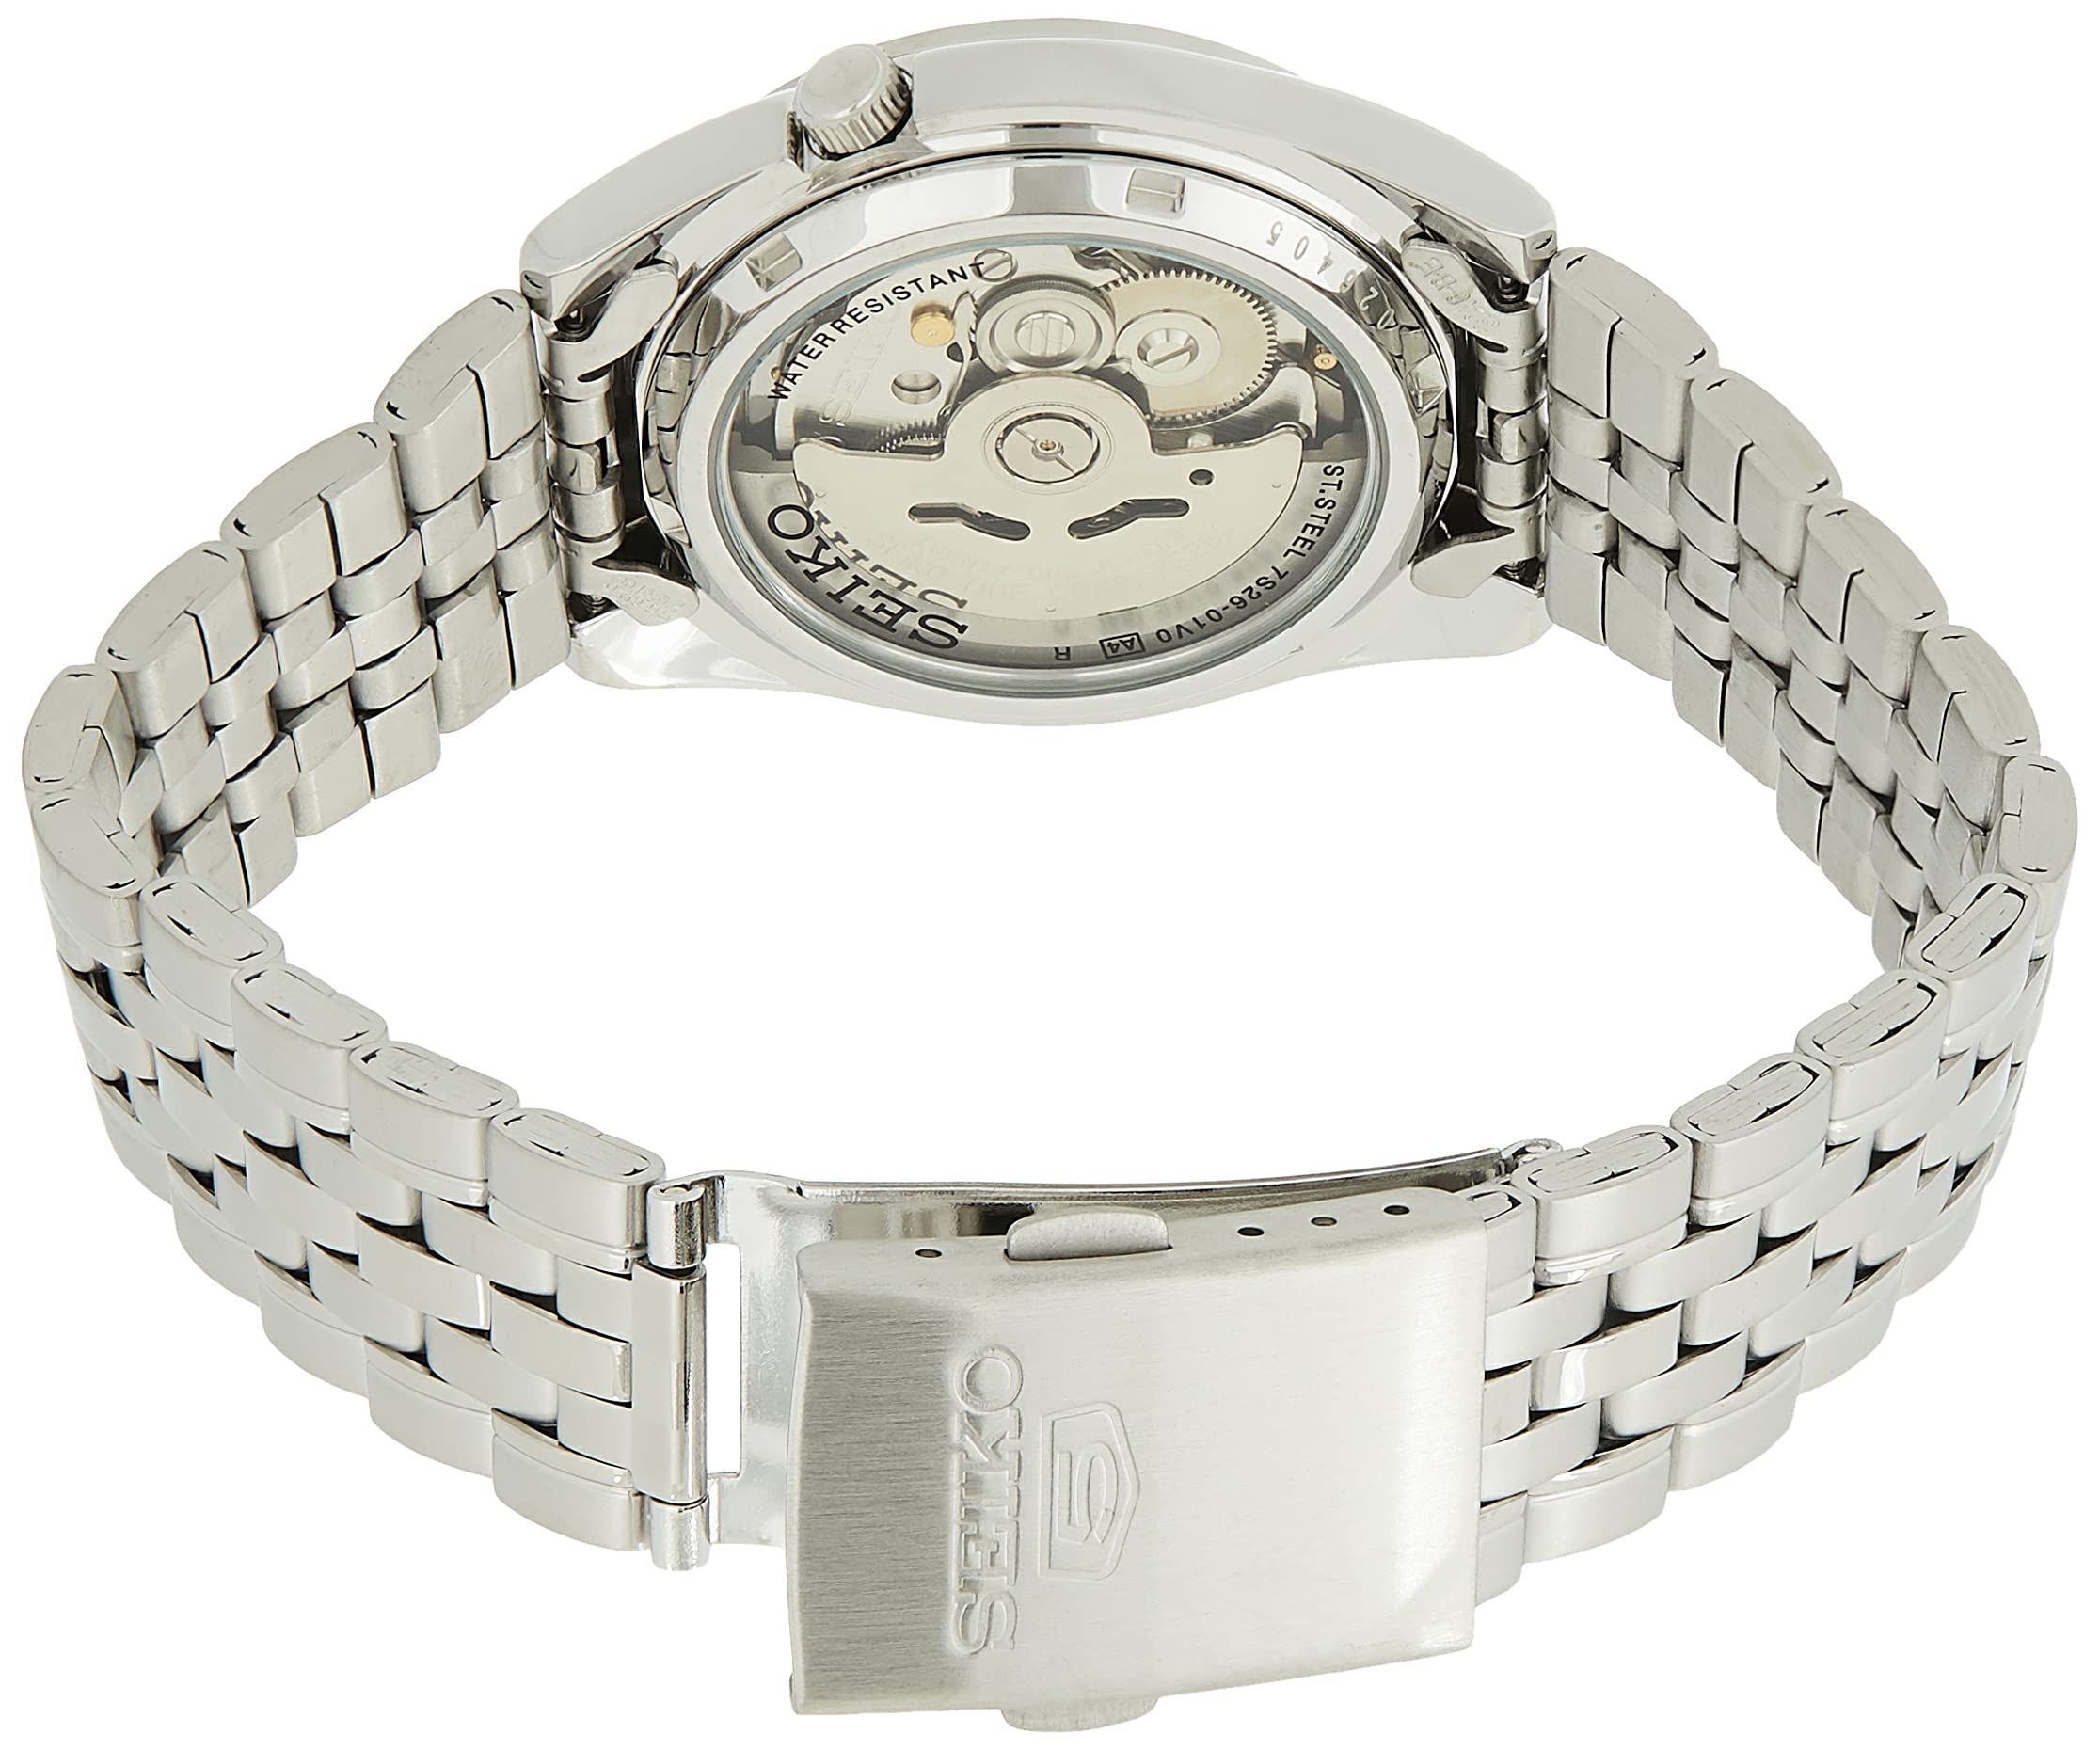 Mua Seiko 5 Mens Automatic Watch SNK369 trên Amazon Mỹ chính hãng 2023 |  Fado